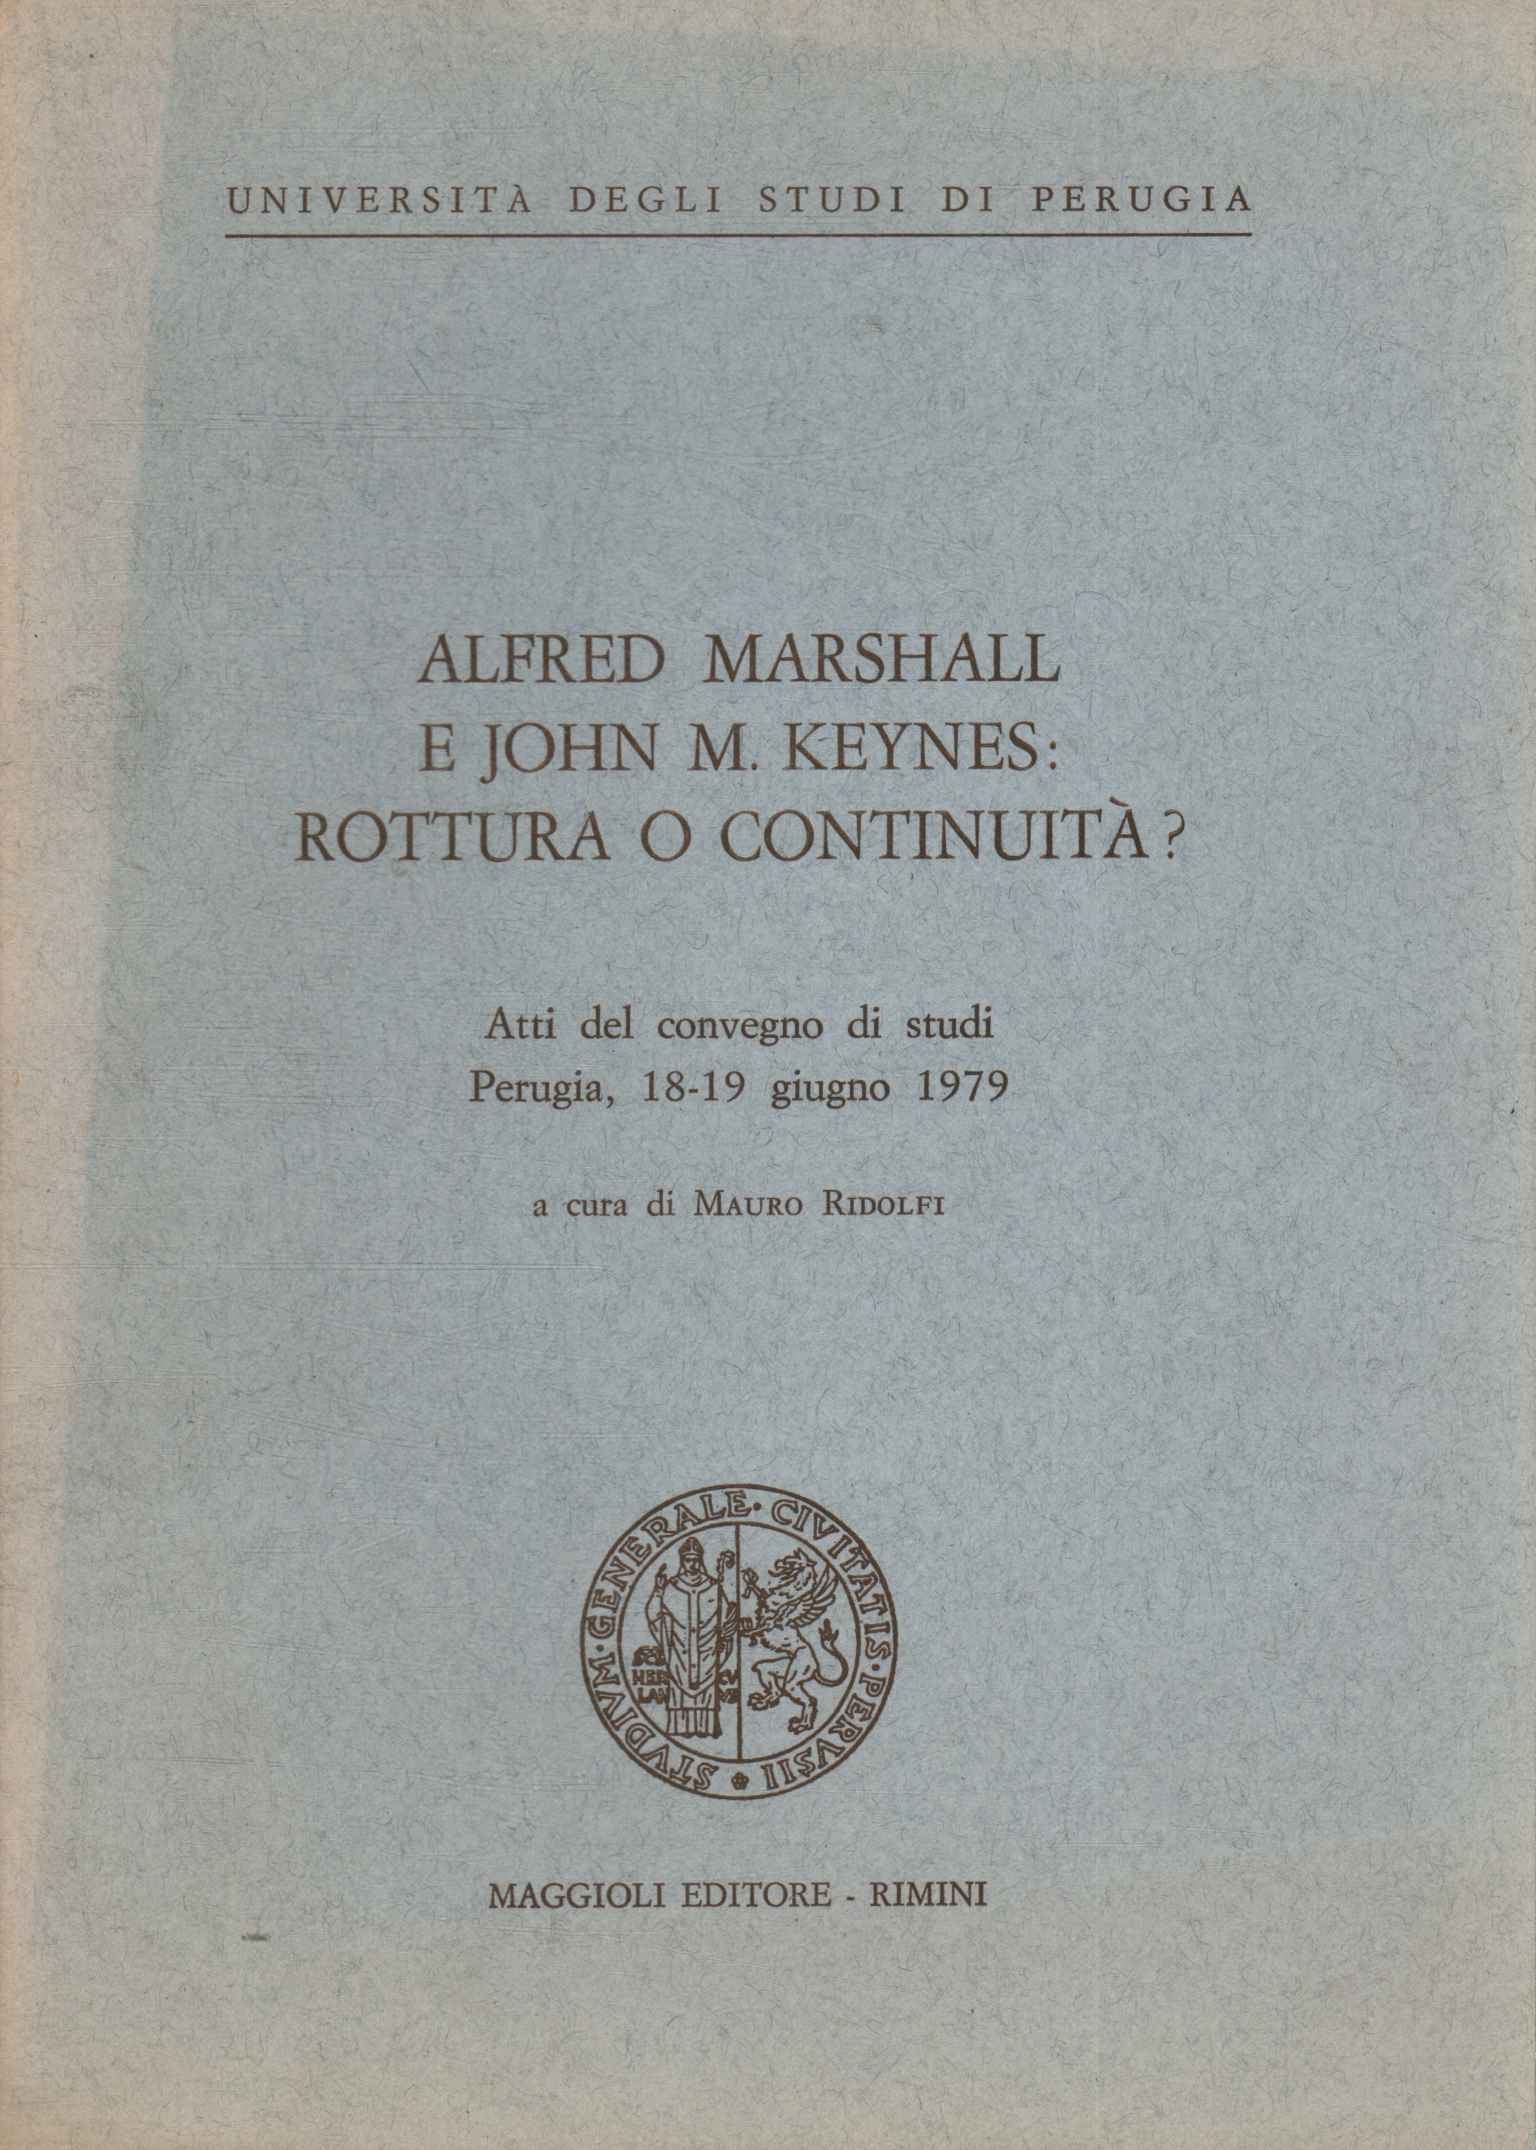 Alfred Marshall and John M. Keynes: breakup